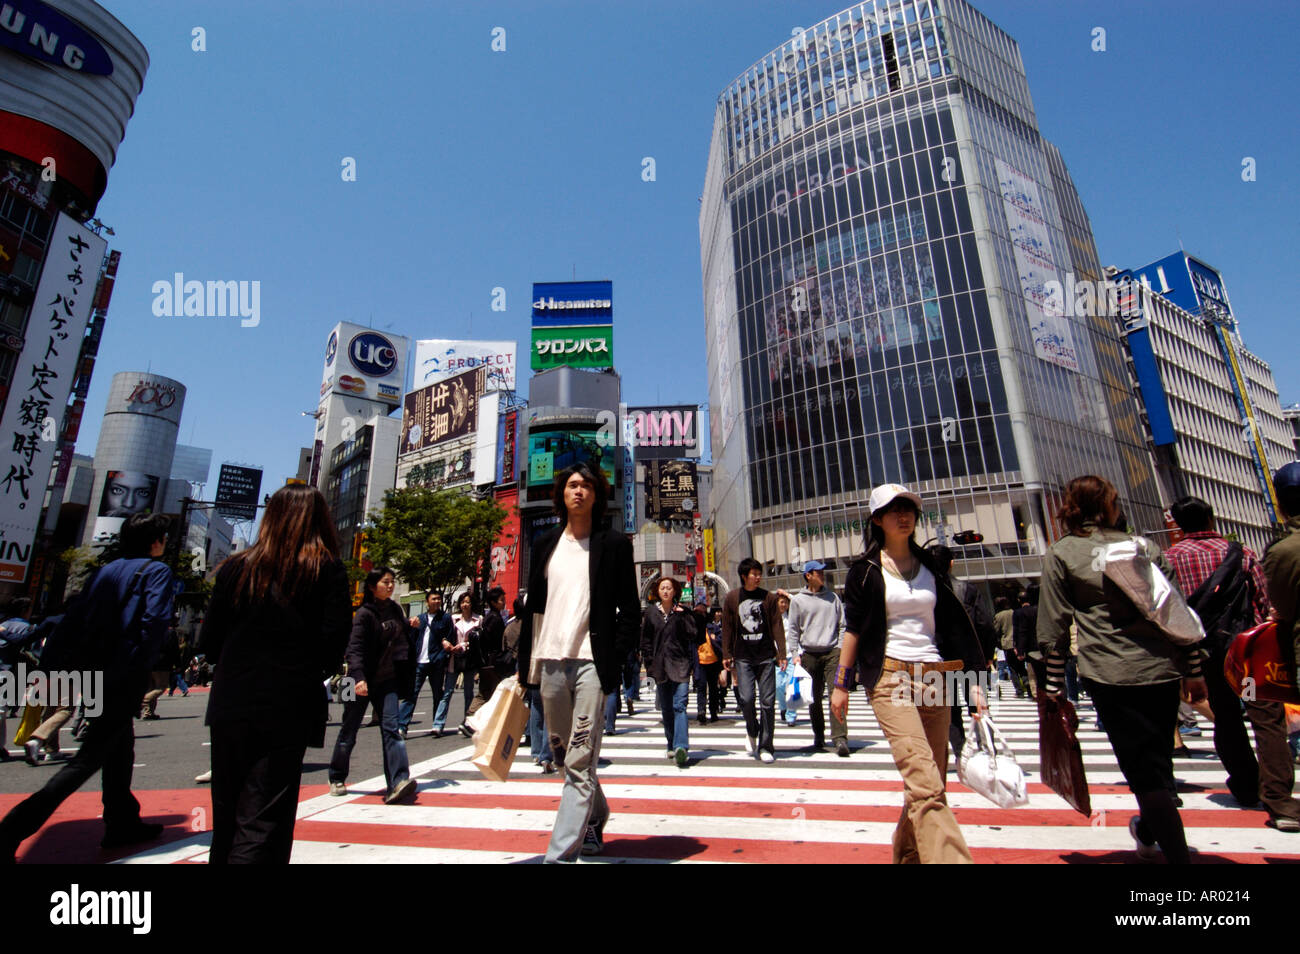 Pedestrians cross busy Hachiko crossing in Shibuya Tokyo Japan Stock Photo